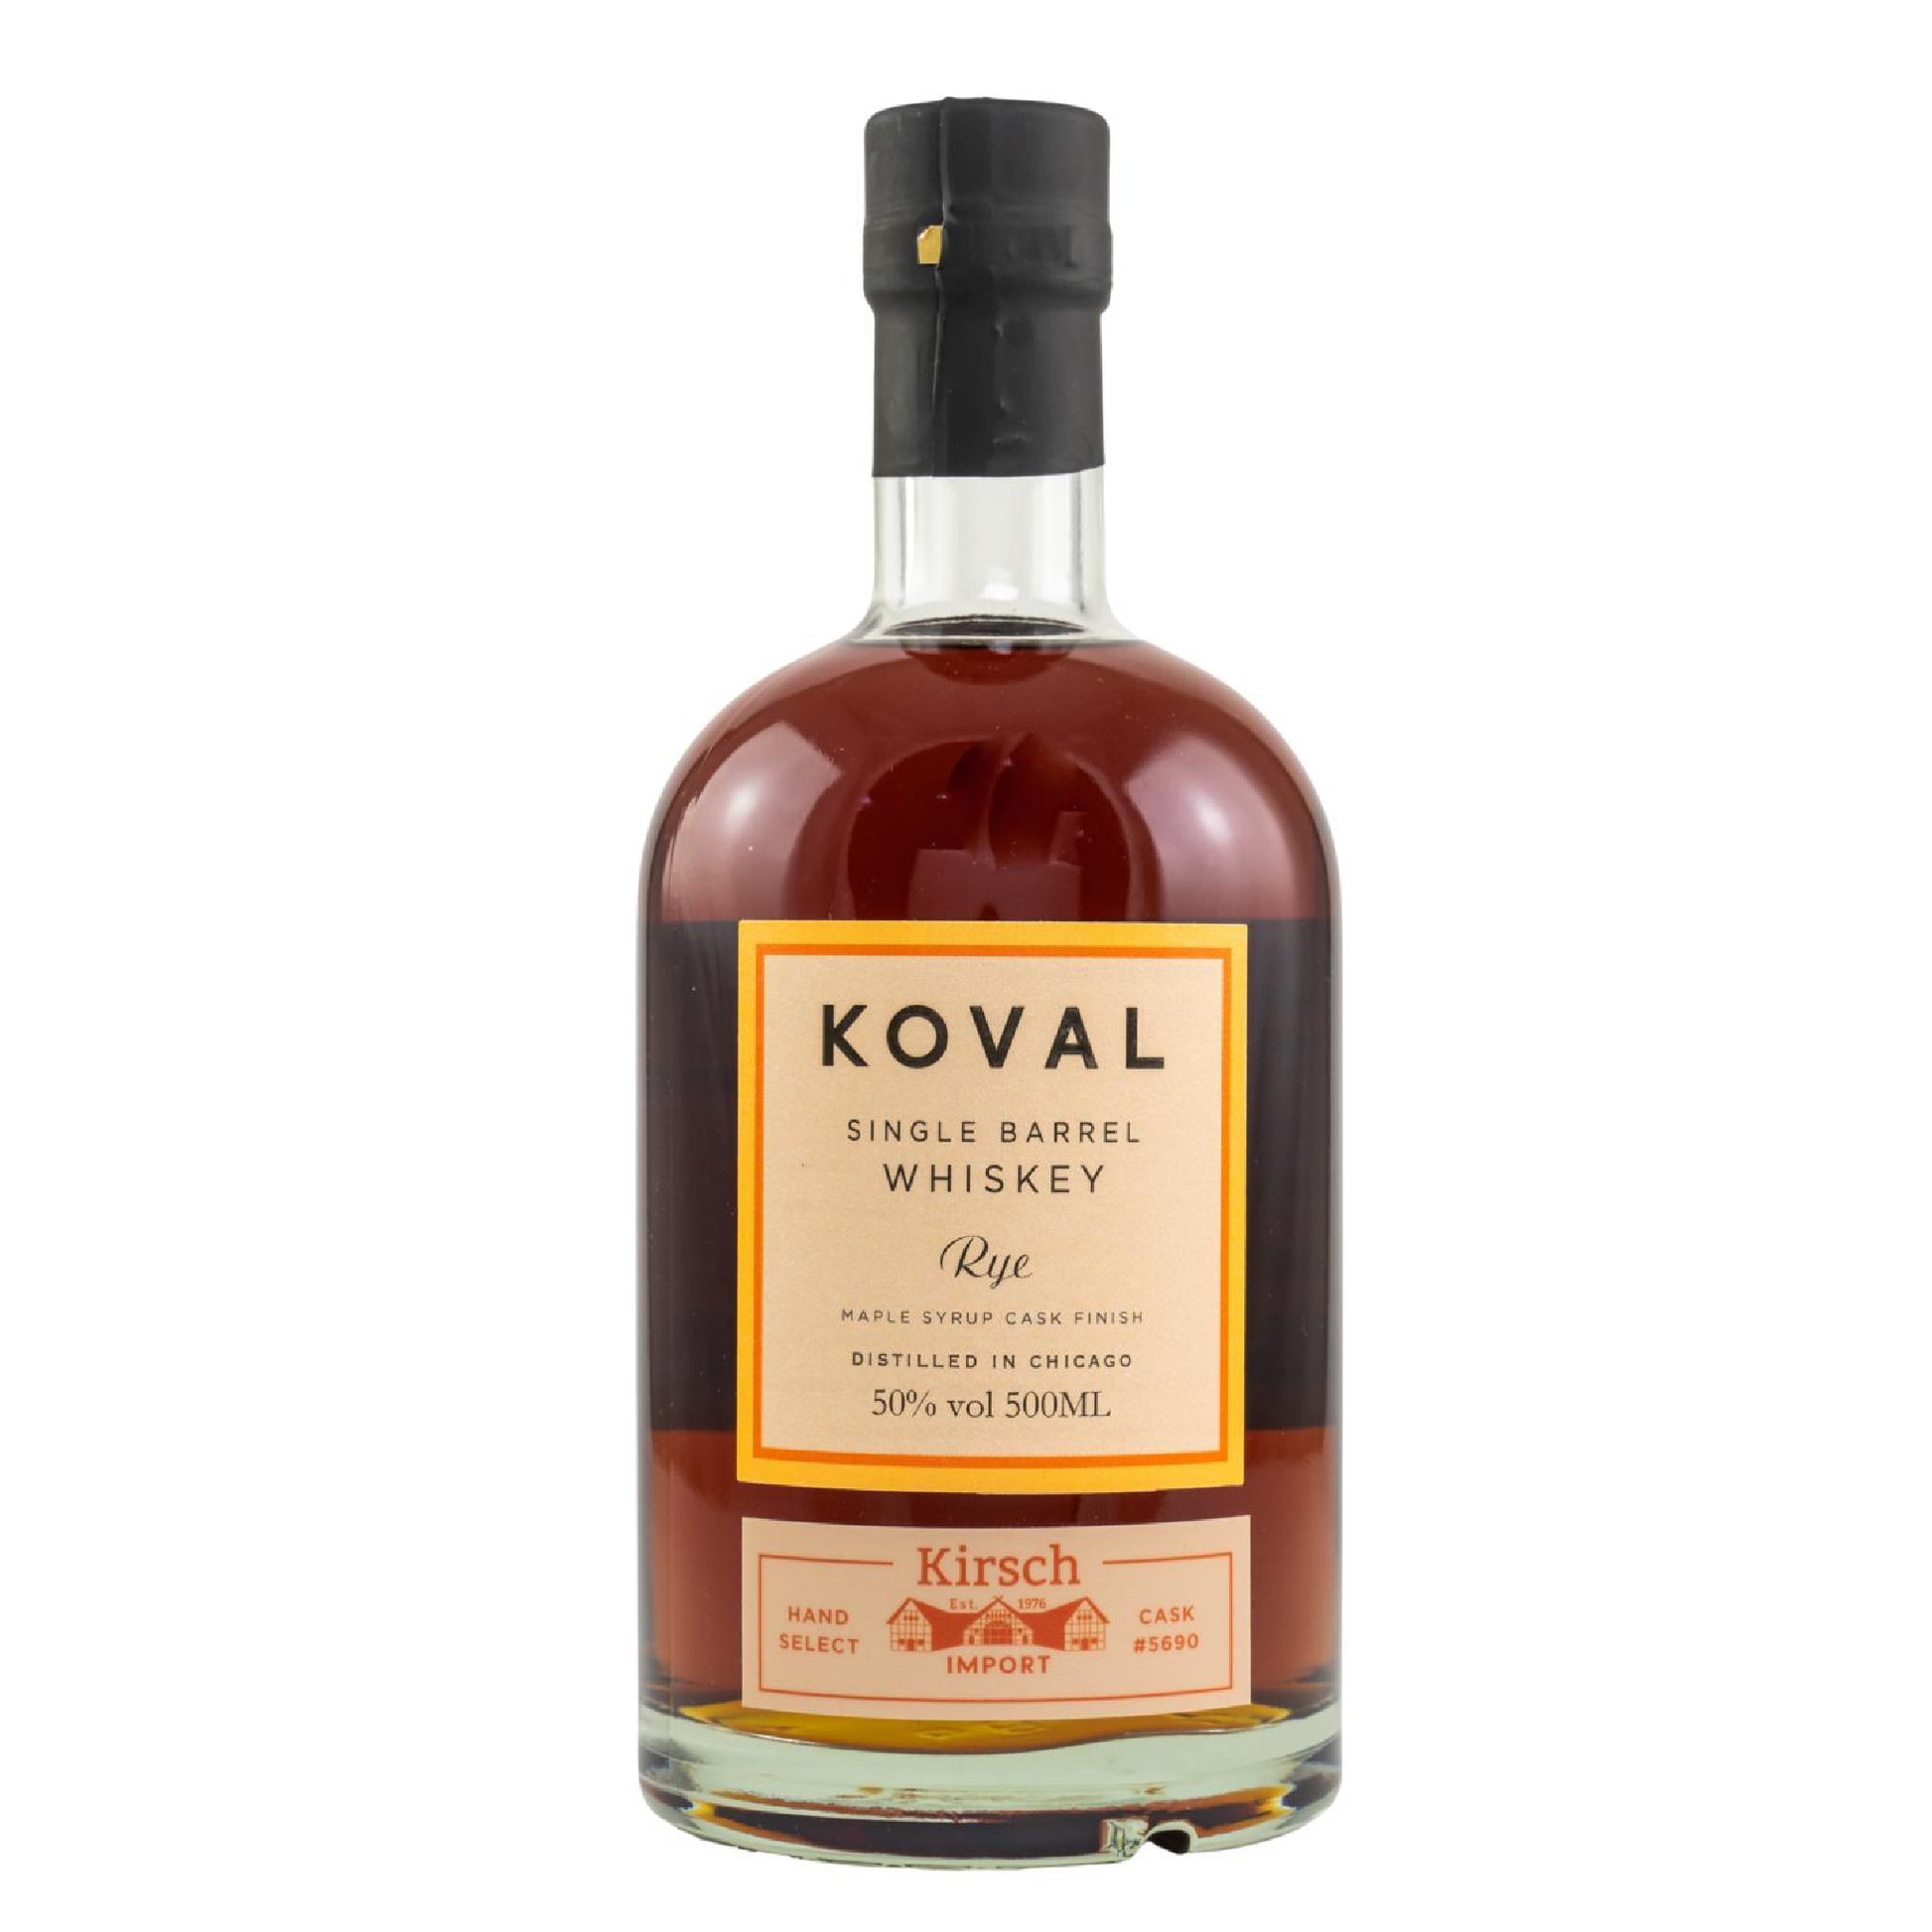 Koval Rye Whiskey Single Barrel Maple Syrup Cask Finish - Liquor Geeks